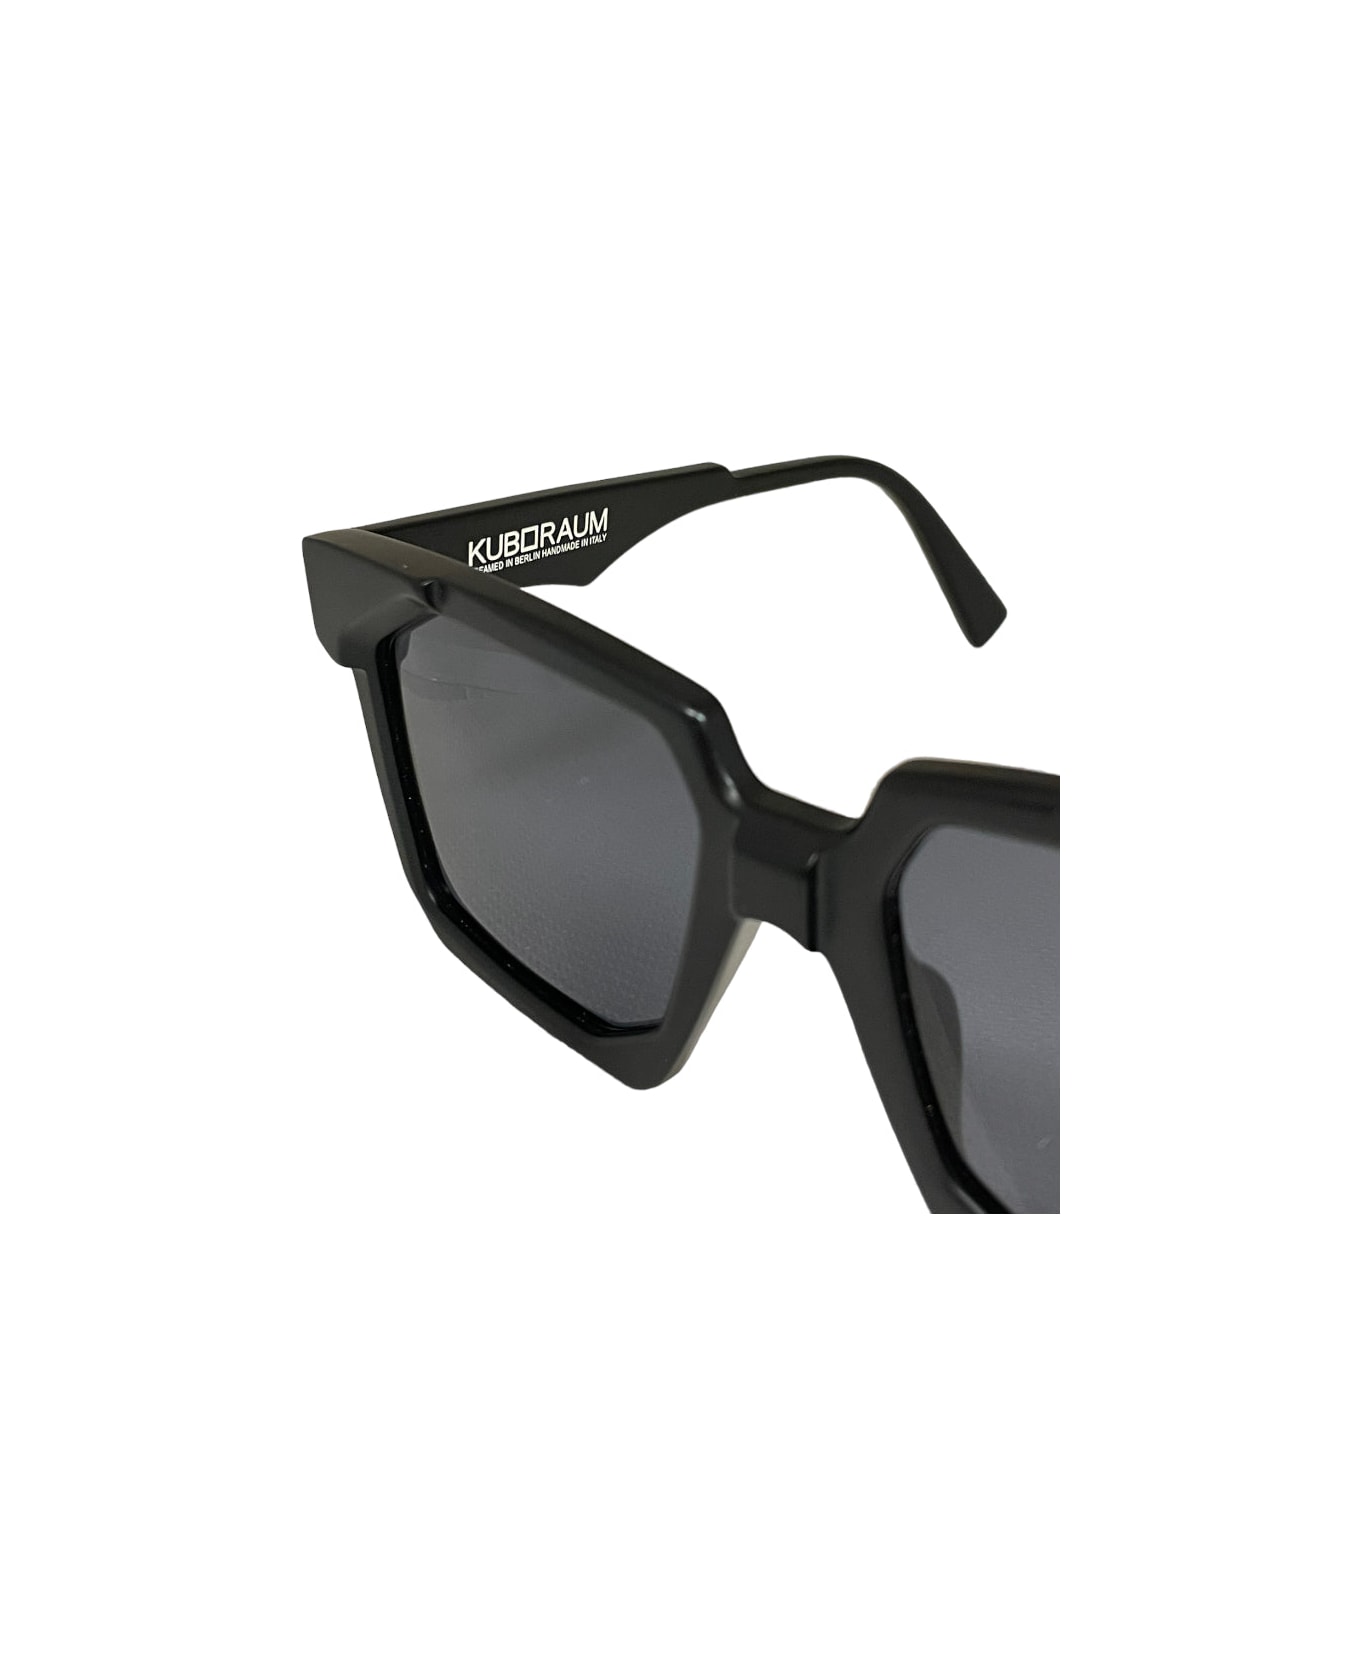 Kuboraum Maske K30 - Matte Black Sunglasses サングラス